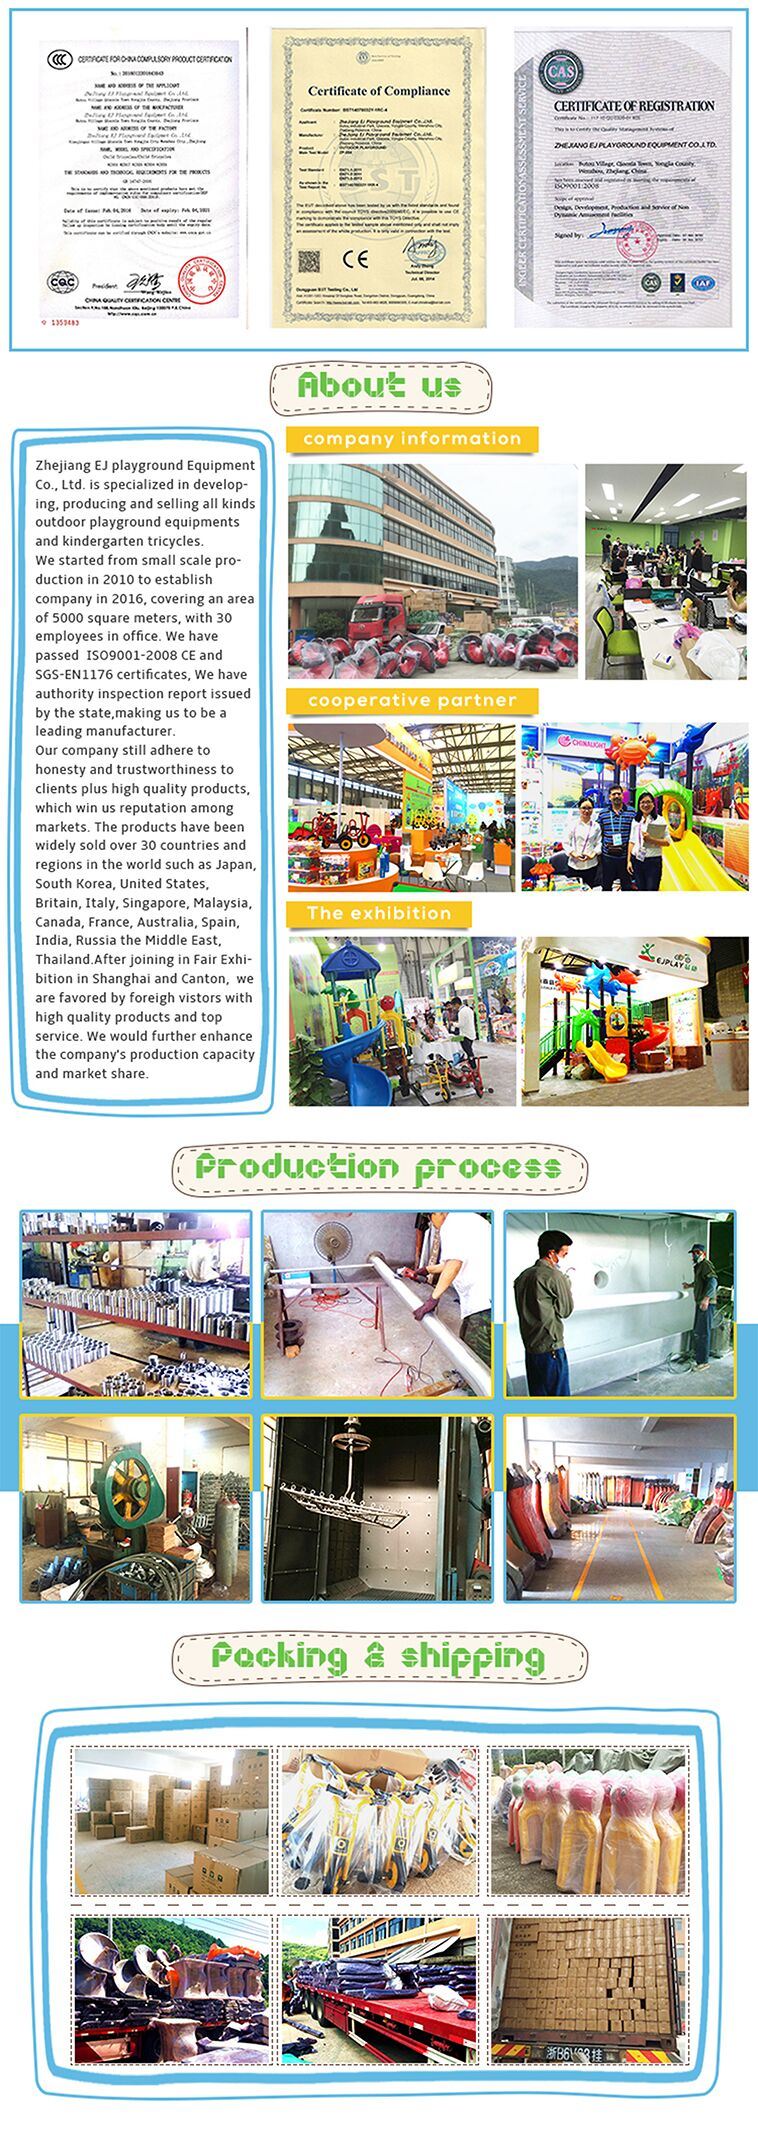 Plastic Slide Type Plastic Slide and Swing Toys, Outdoor&Indoor Playground Slide